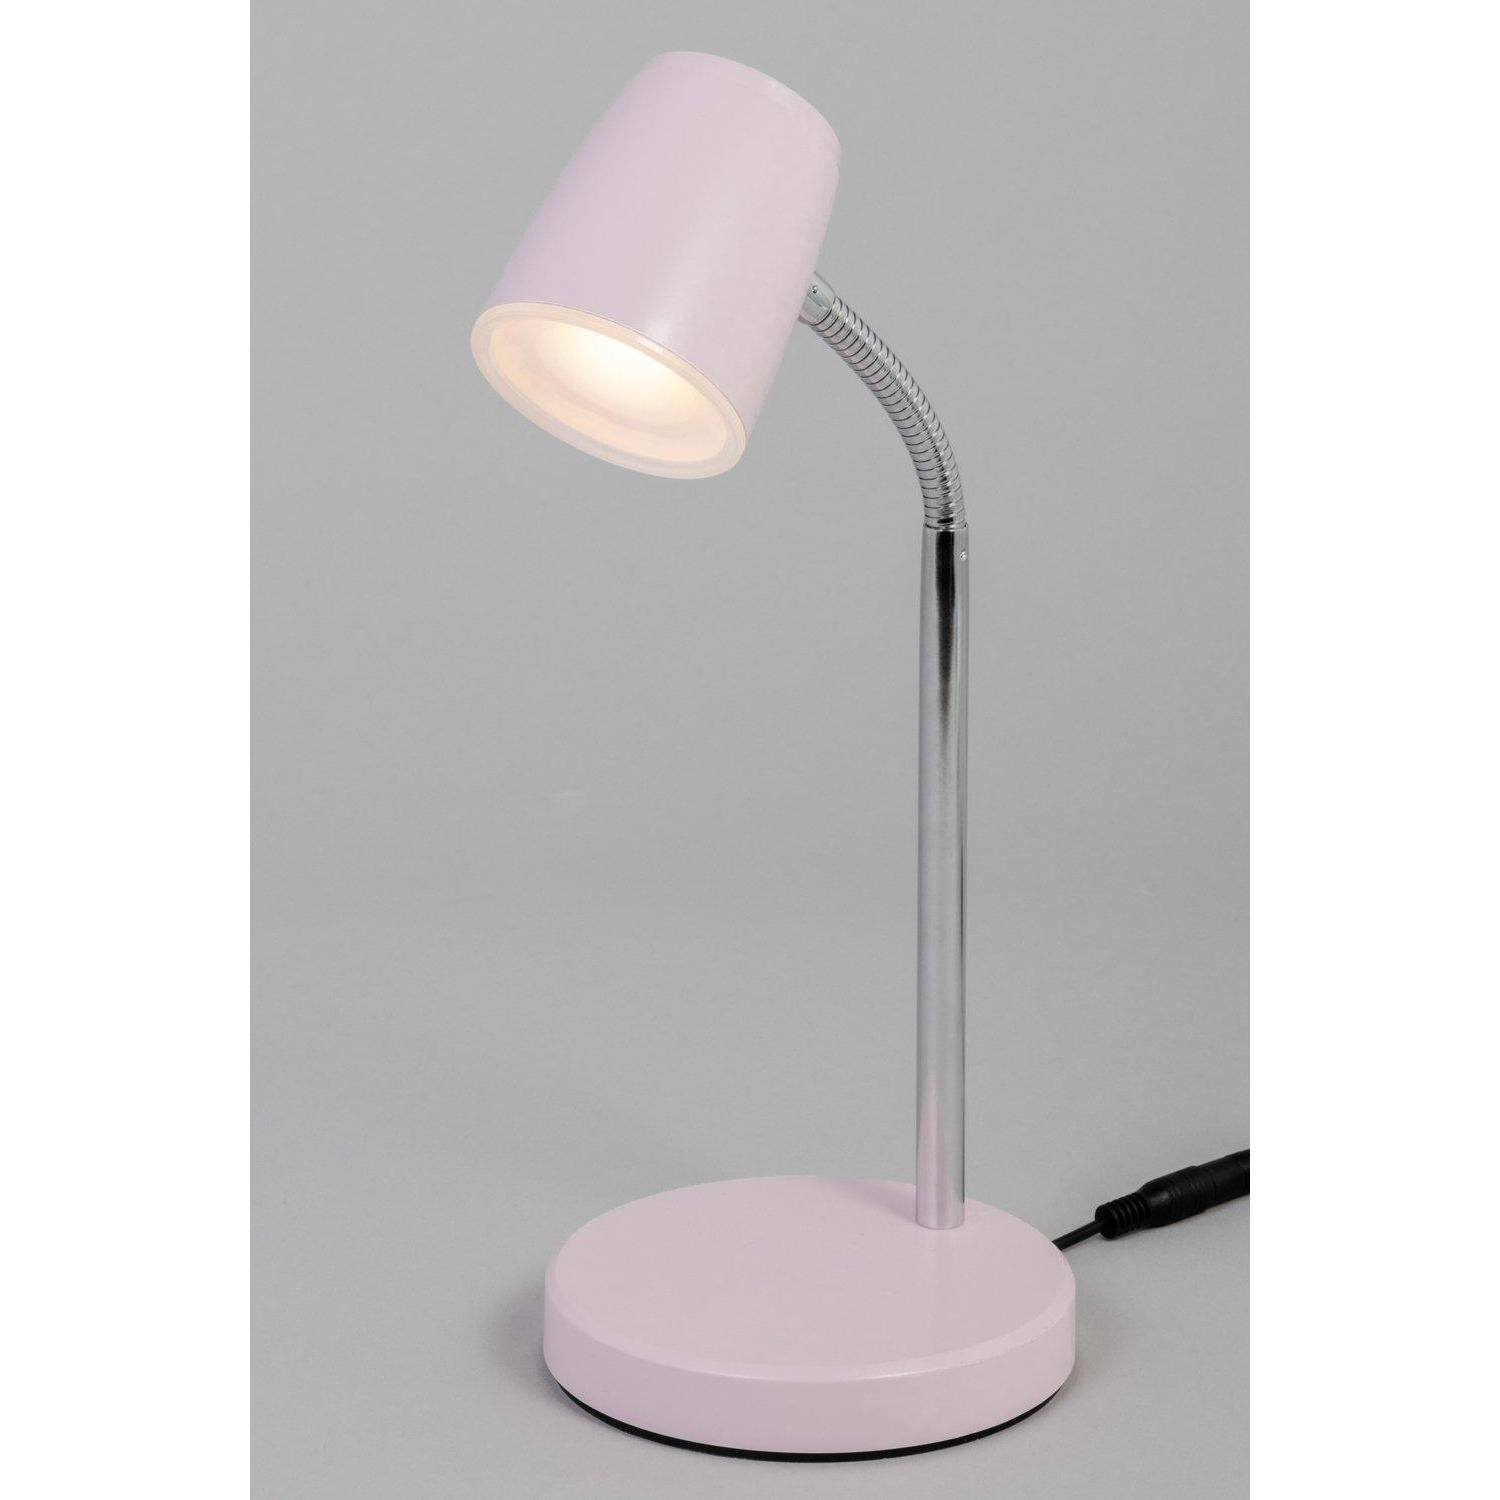 Glow Task Table Lamp - image 1